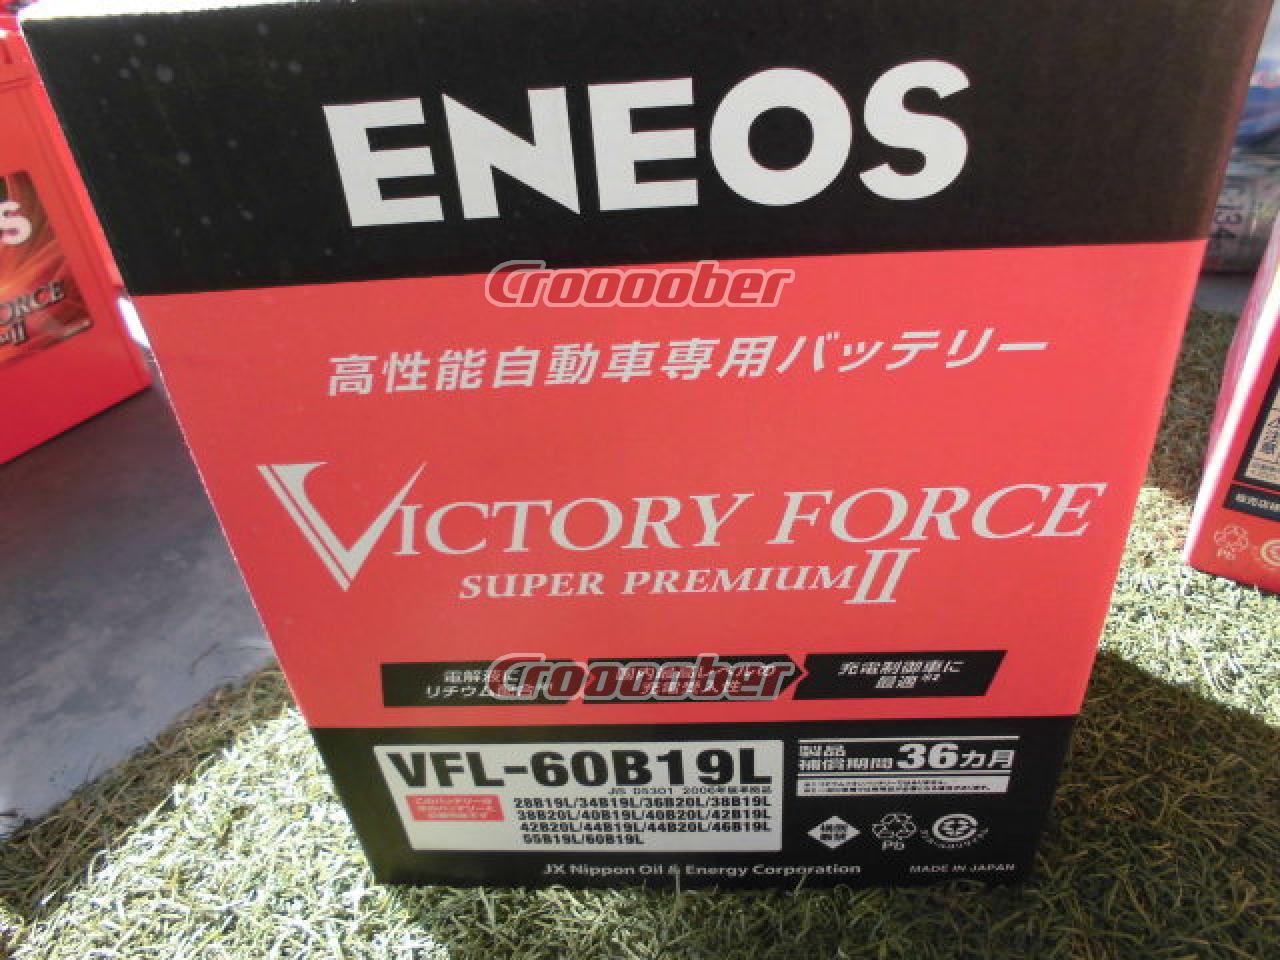 ENEOS(エネオス) VICTORY FORCE カーバッテリー【VFL-60B19L】 メンテナンス バッテリーパーツの通販なら  Croooober(クルーバー)